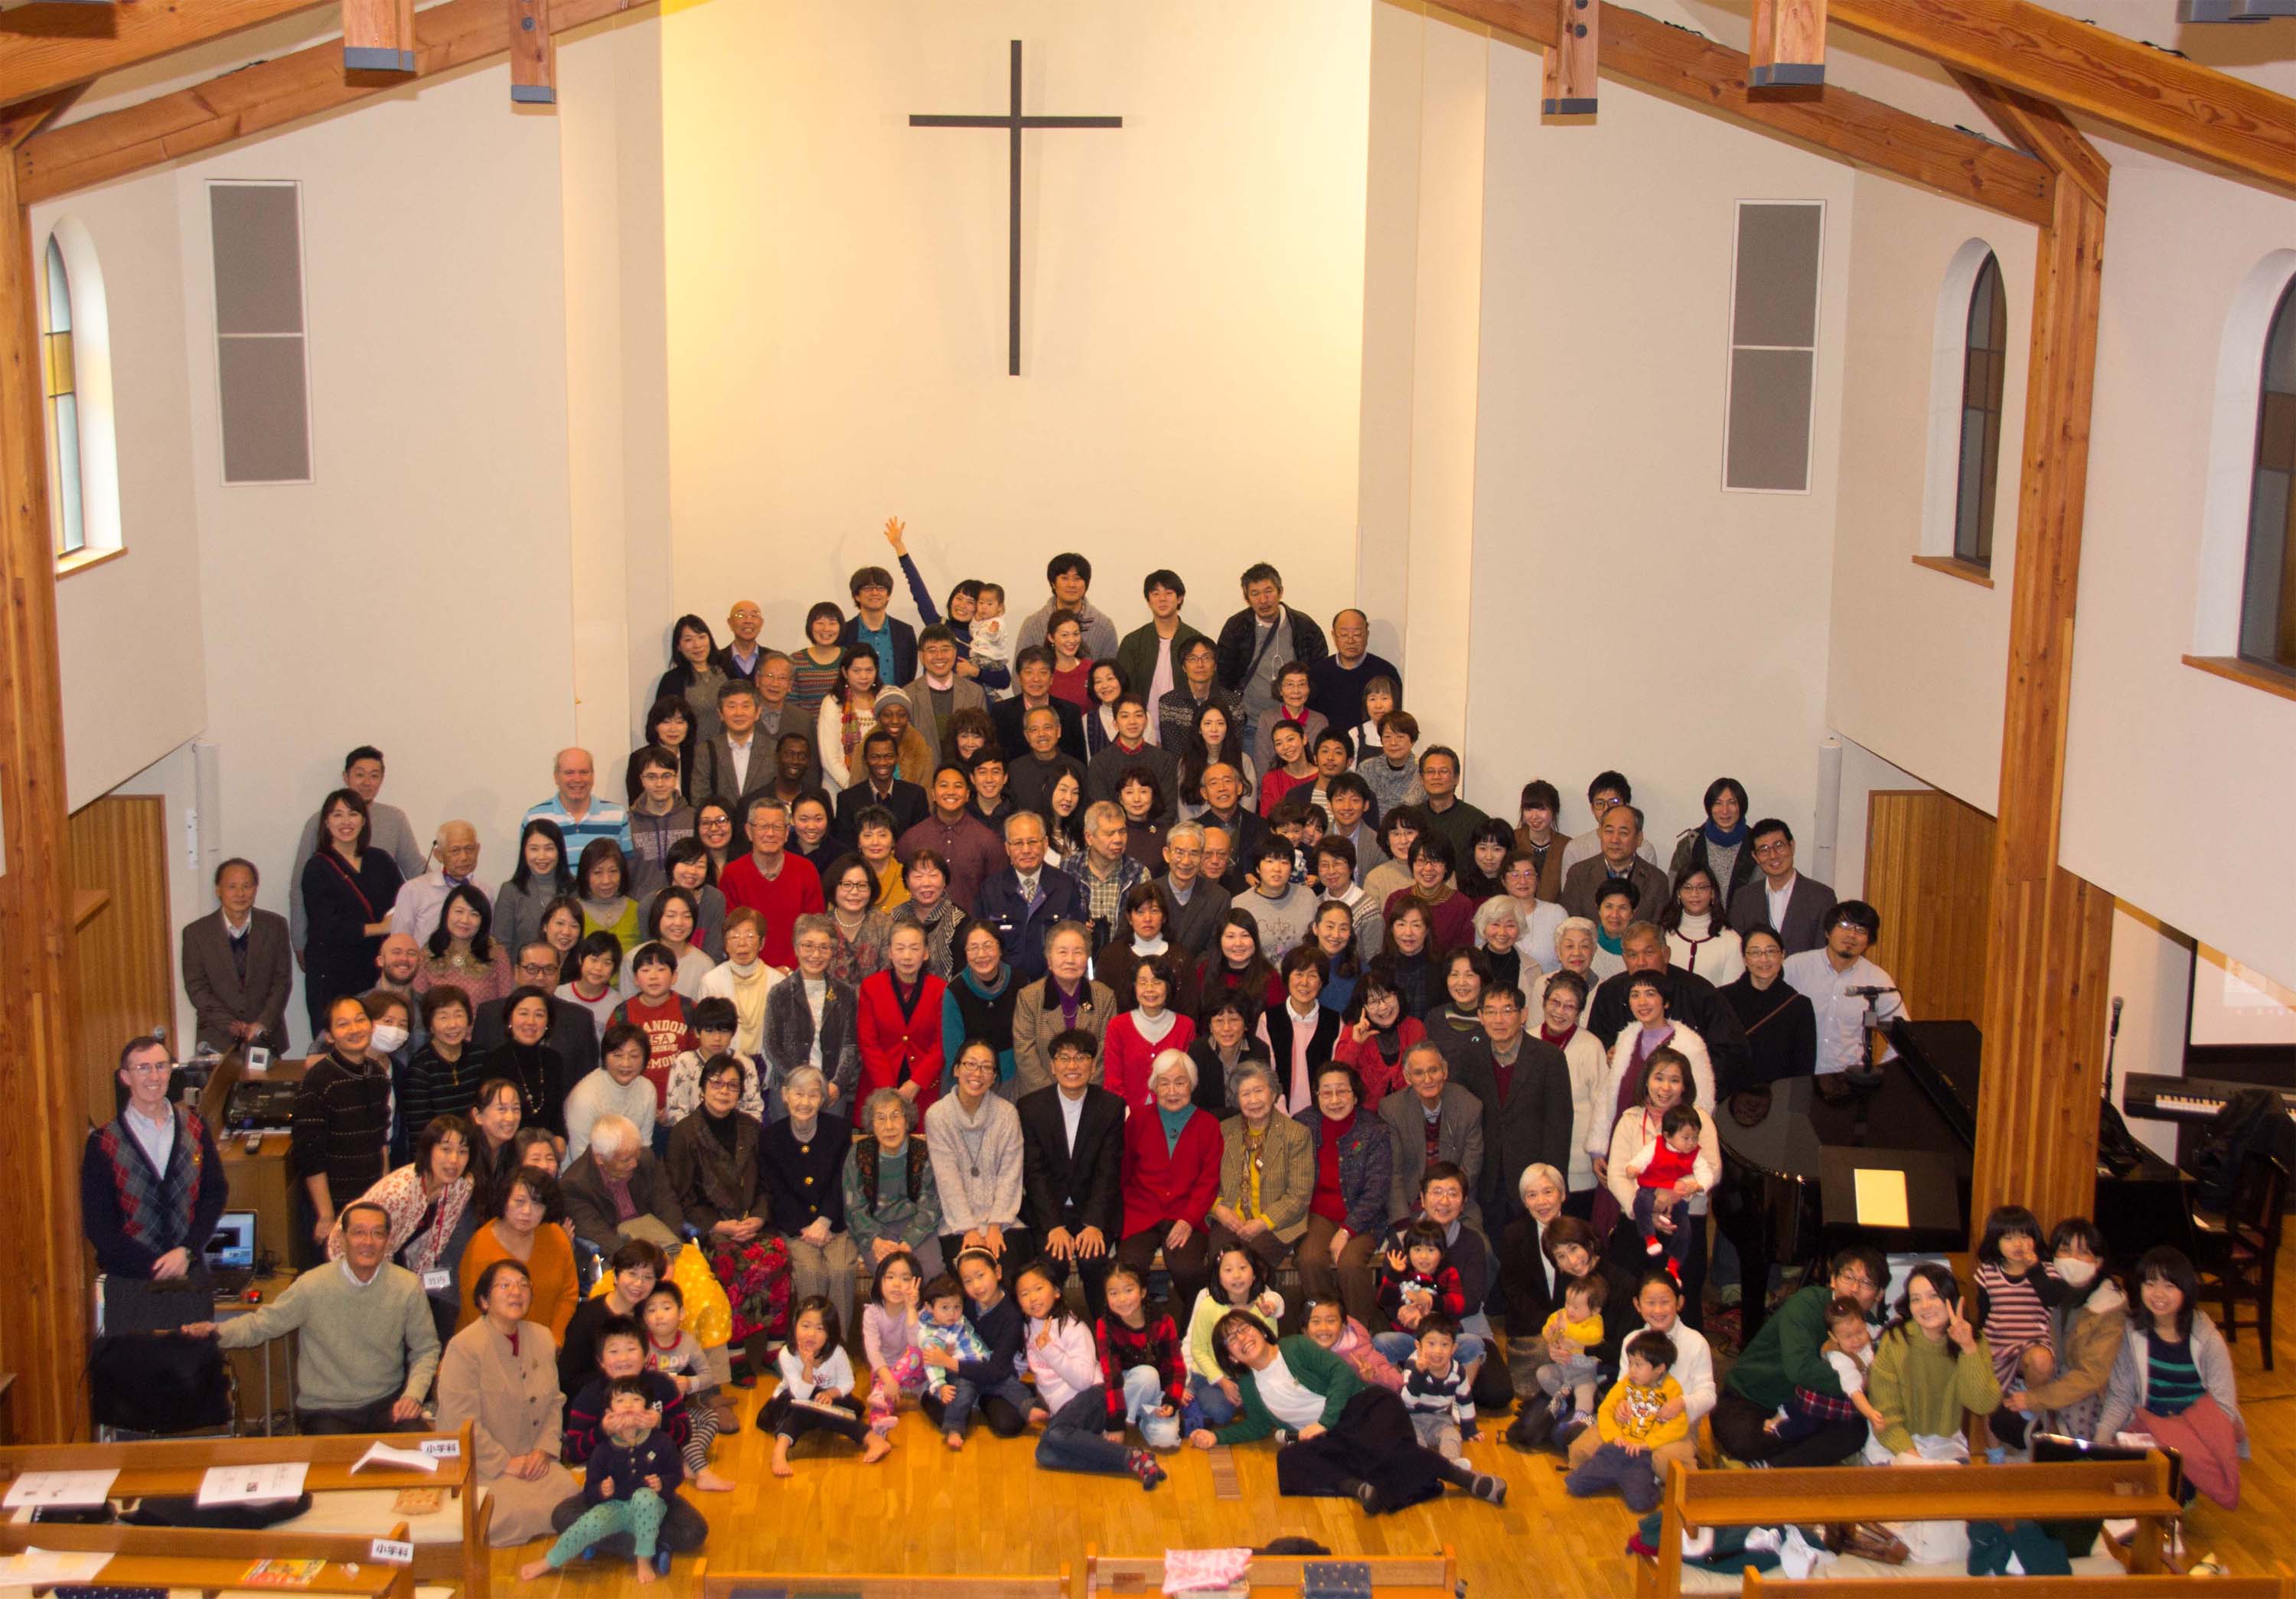 Nagasaki Baptist Church Dec. 24 2017 congregation photo